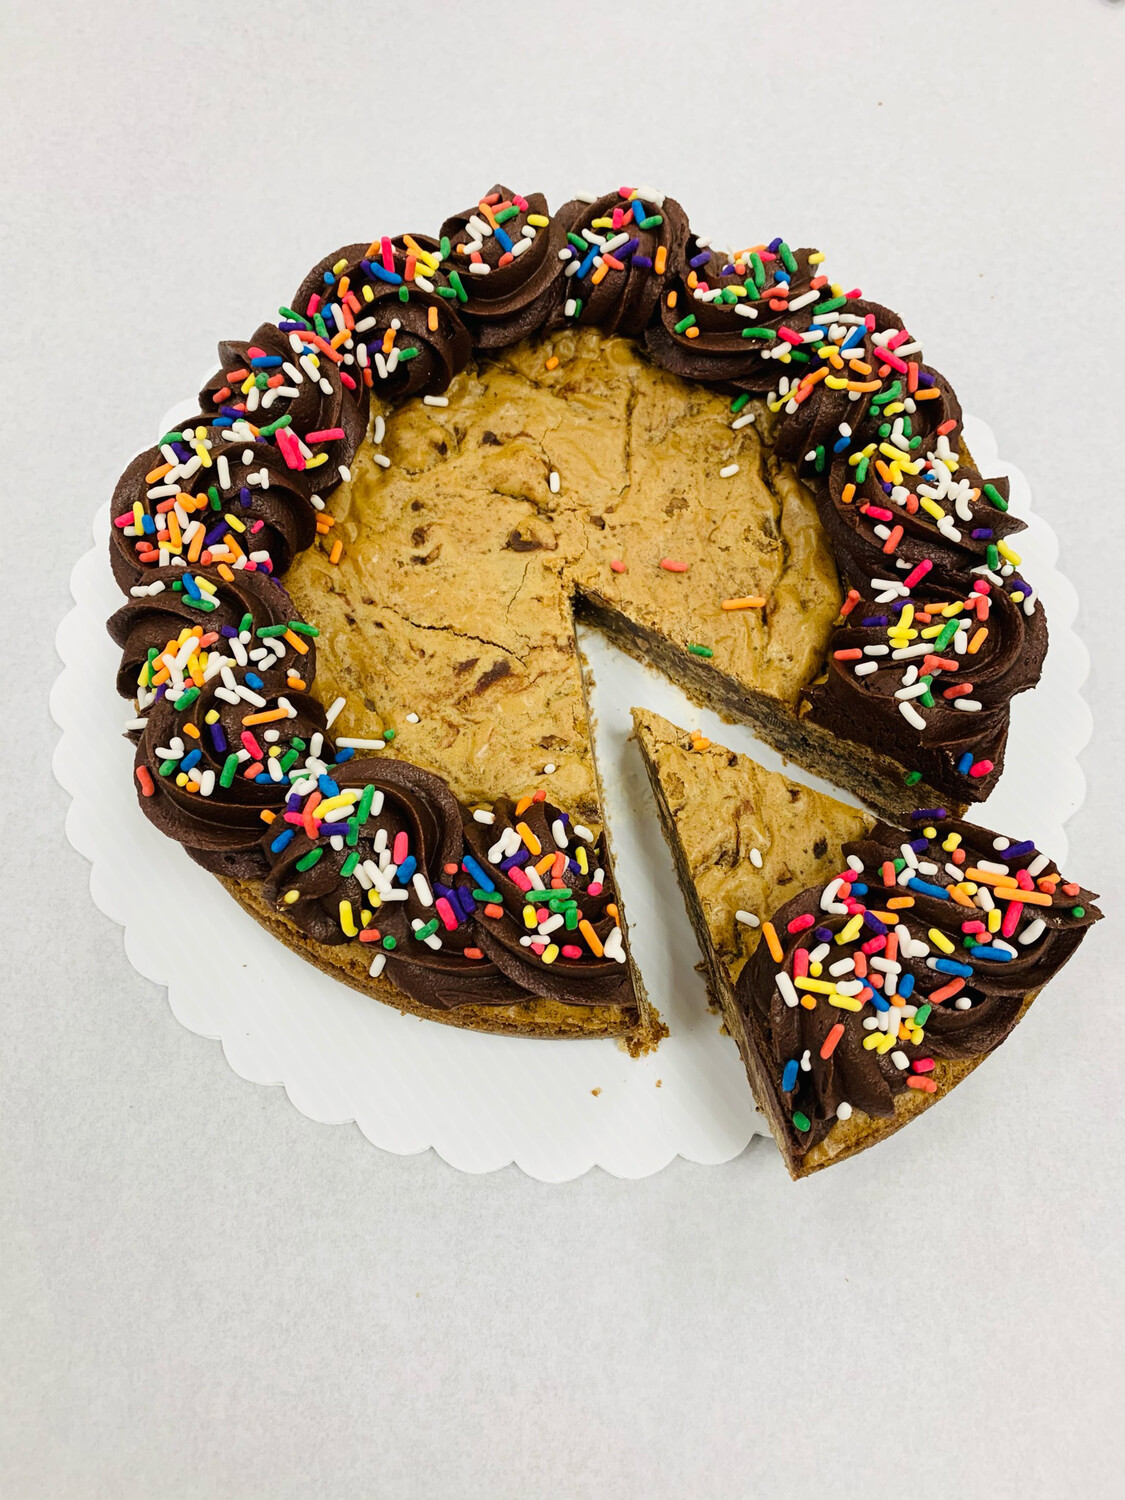 Chocolate Chunk Cookie Cake